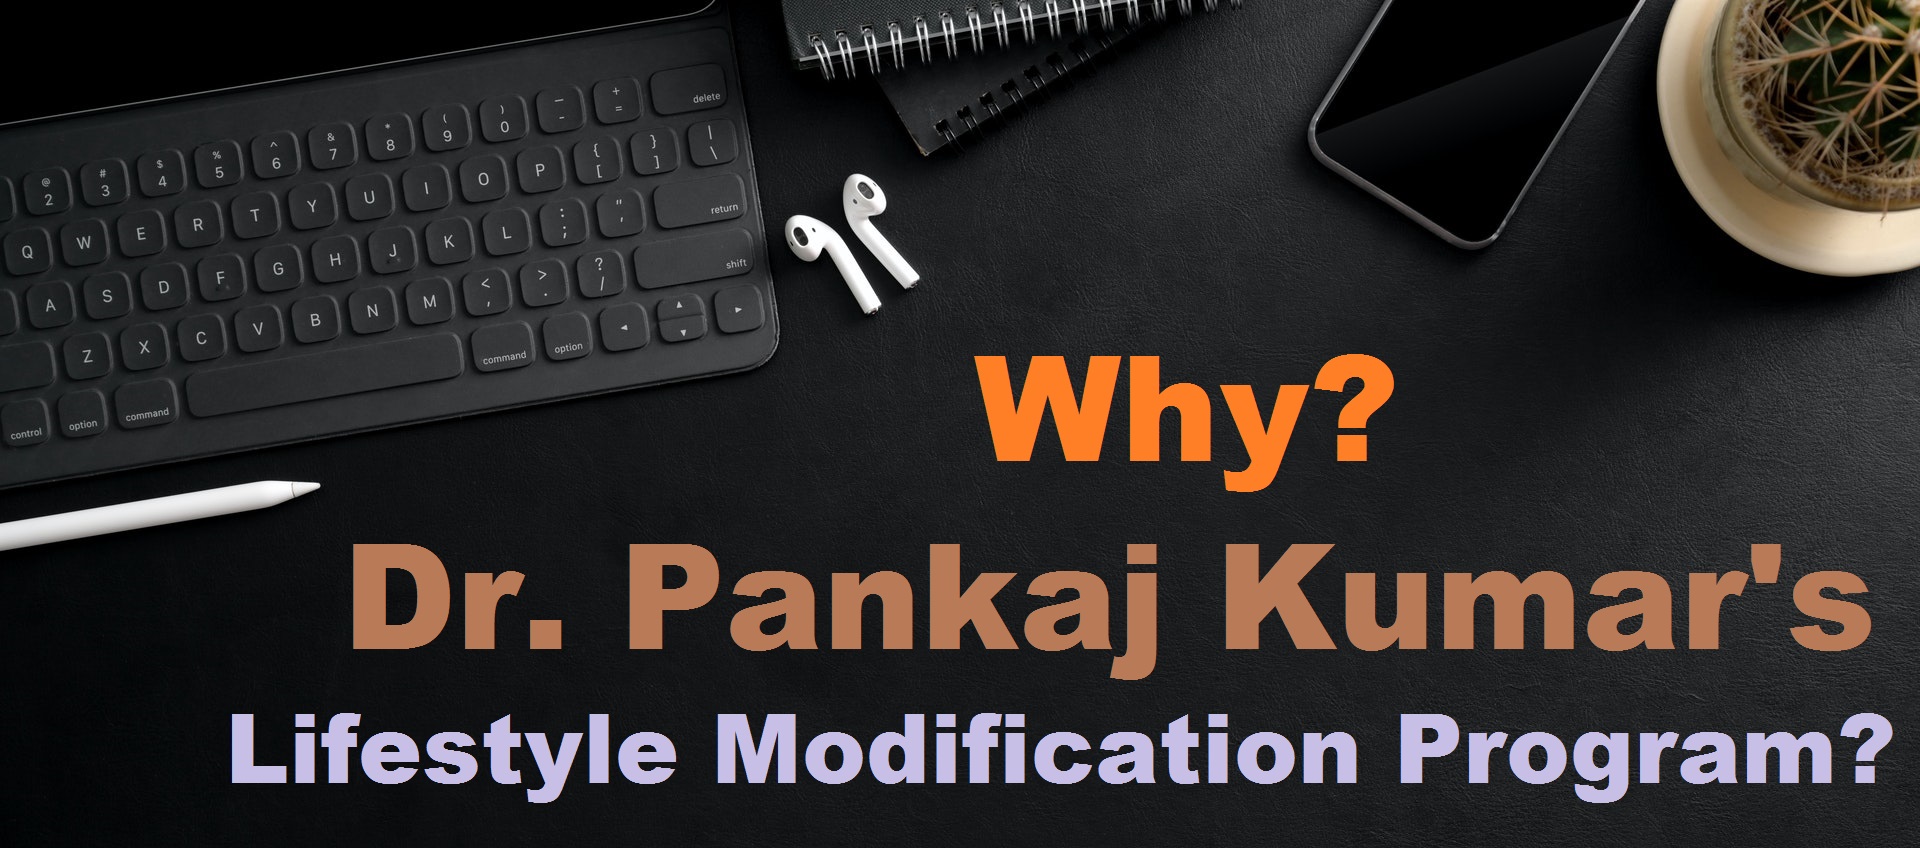 Why Dr. Pankaj Kumar's Lifestyle Modification Program?